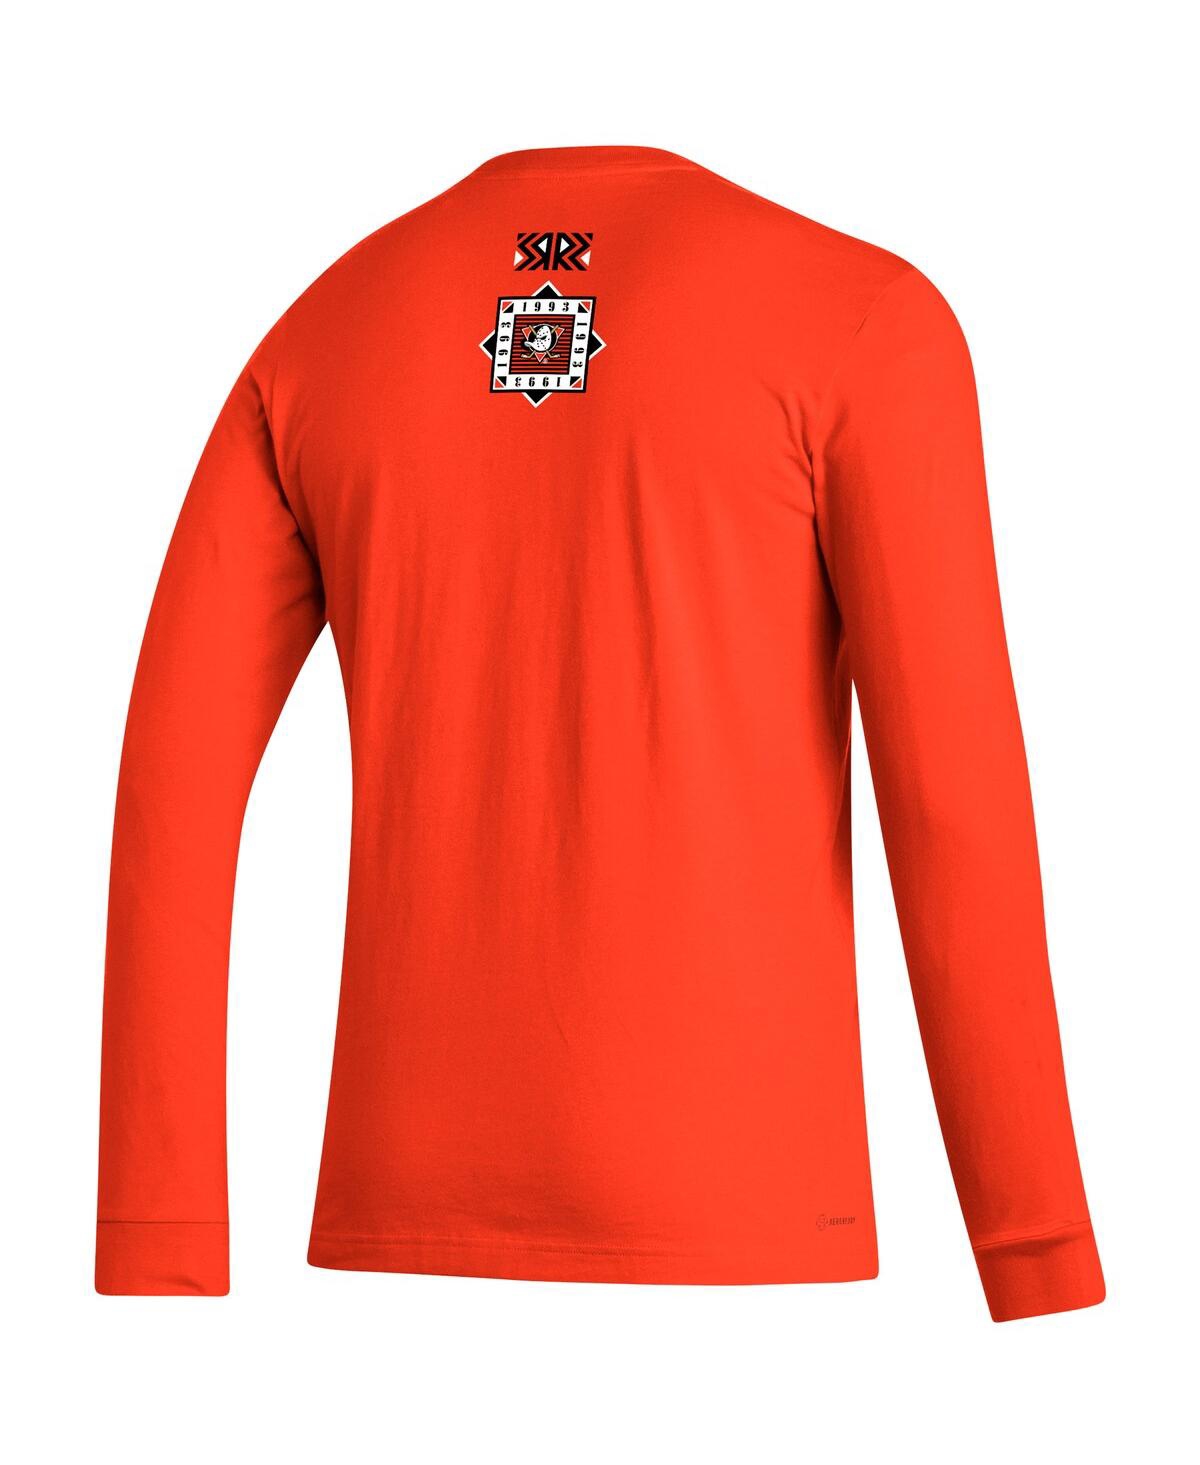 Shop Adidas Originals Men's Adidas Orange Anaheim Ducks Reverse Retro 2.0 Fresh Playmaker Long Sleeve T-shirt